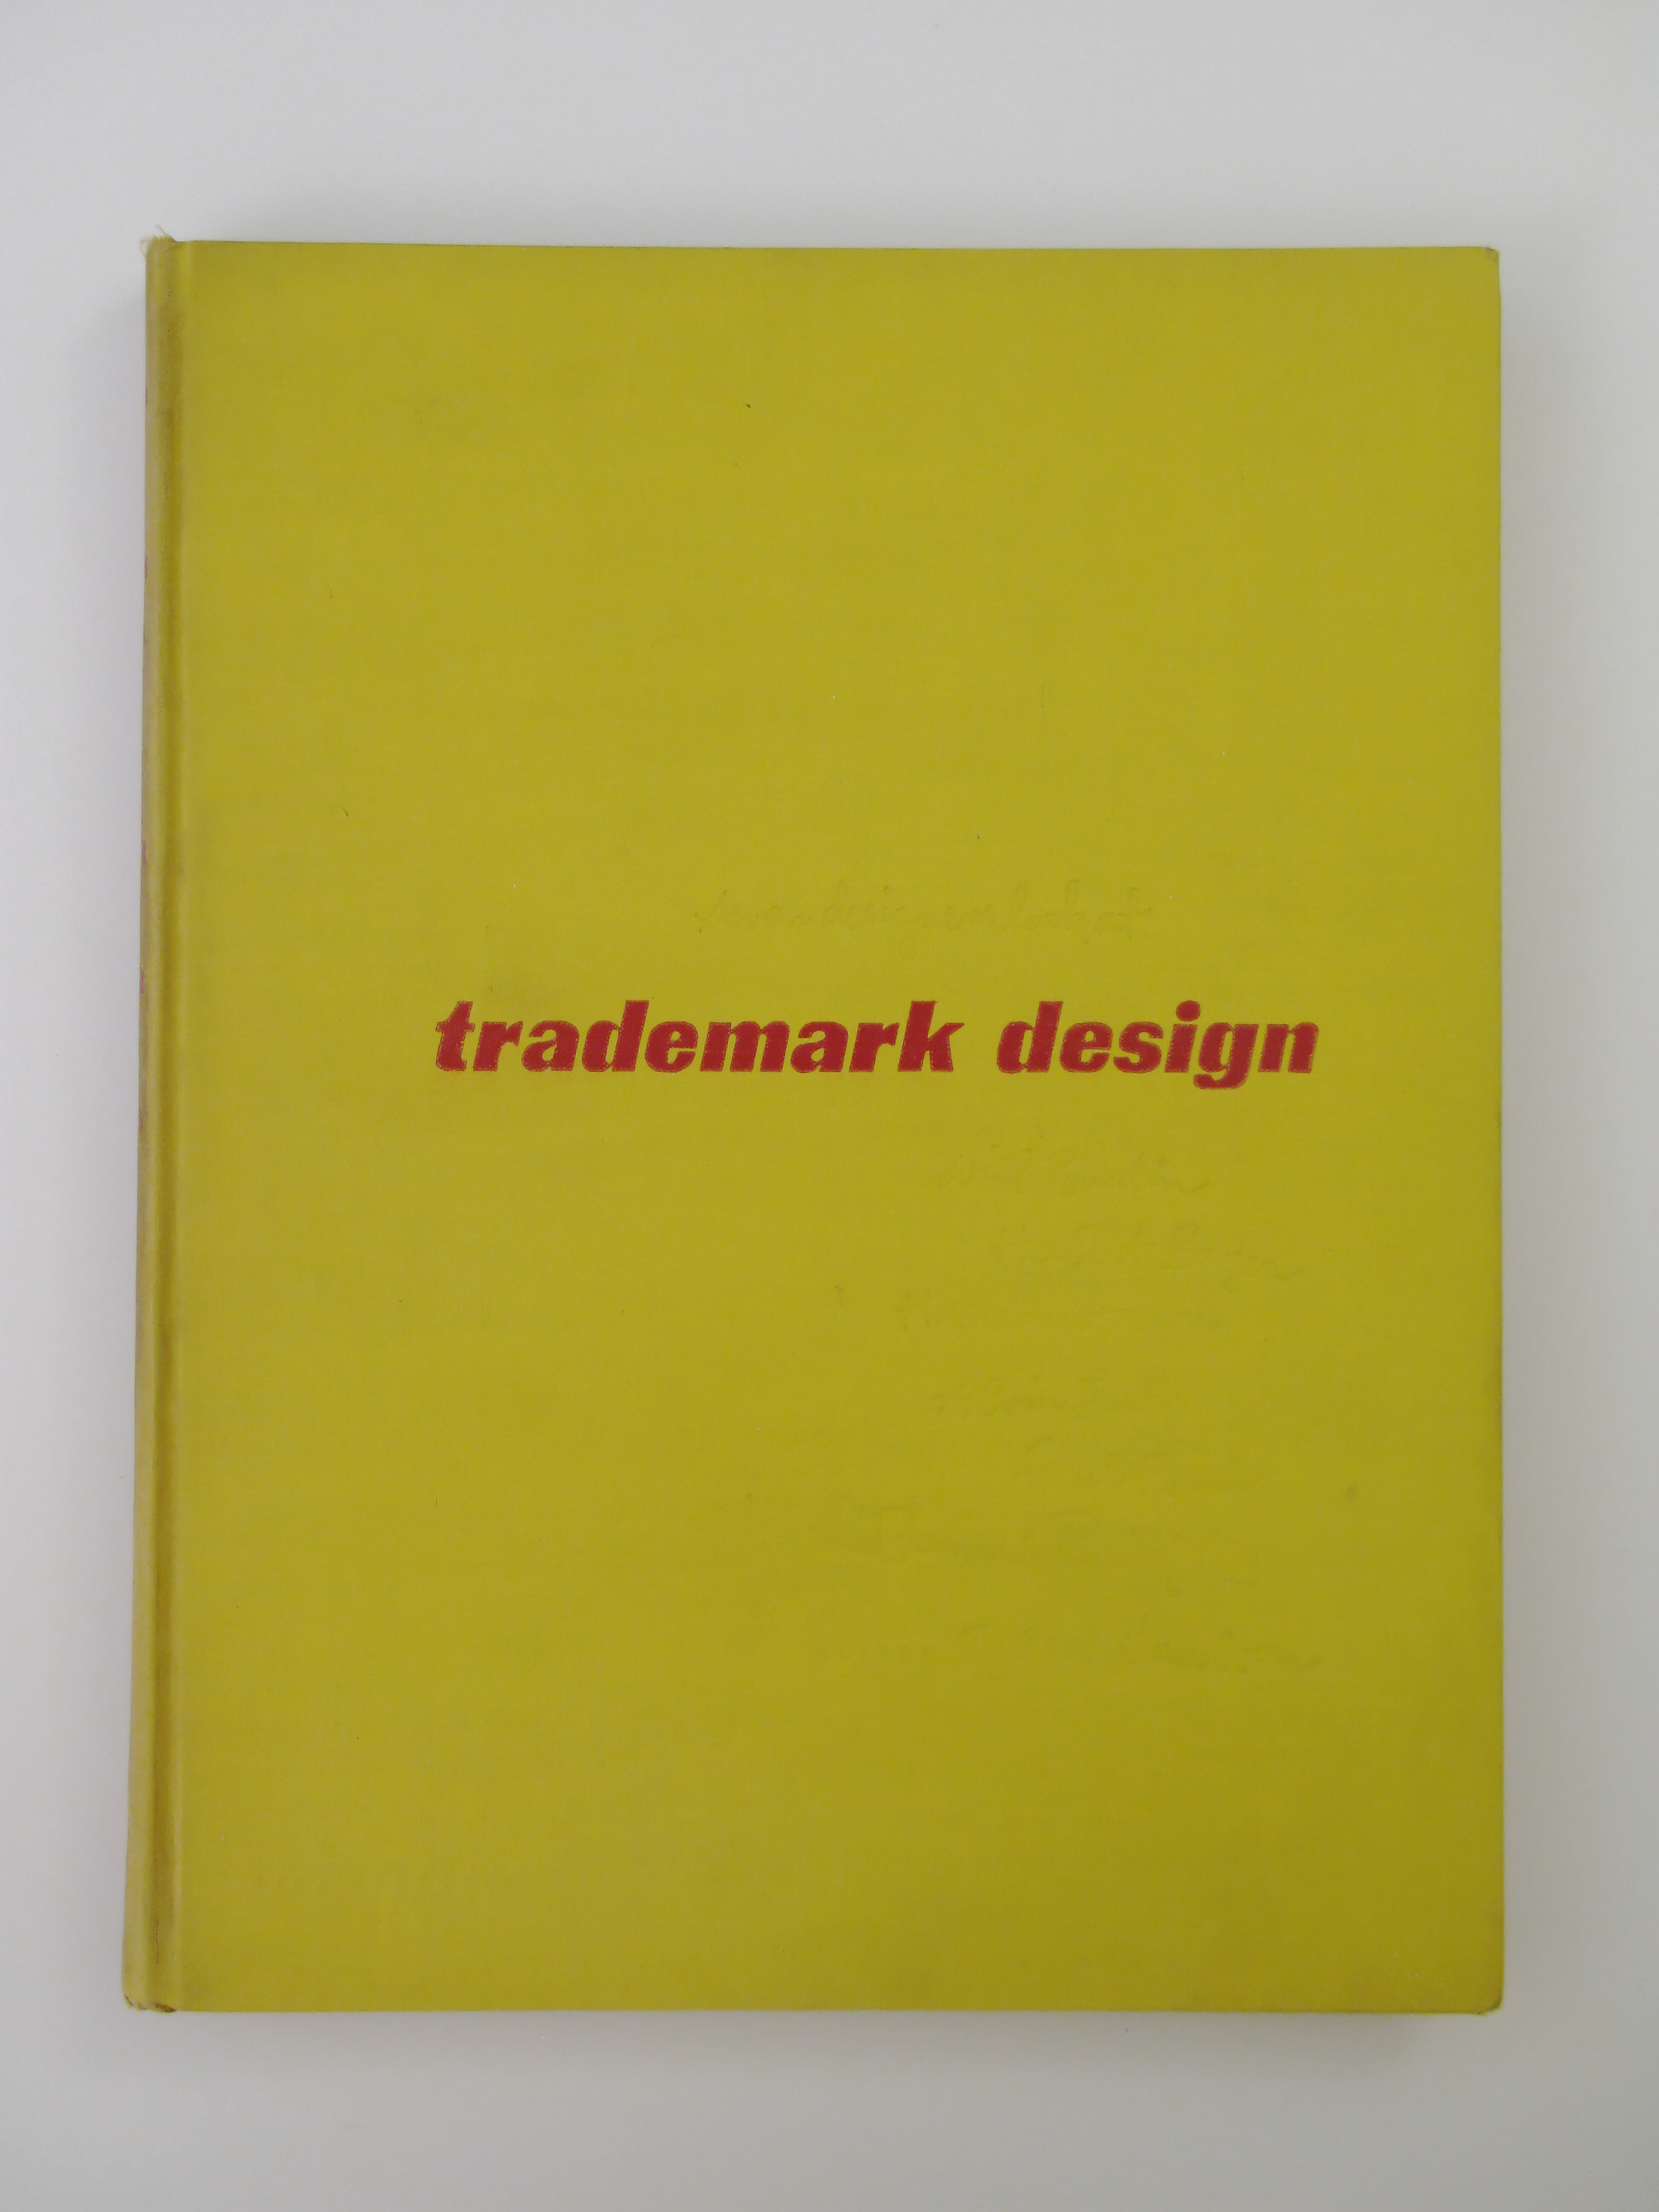 Seven Designers Look at Trademark Design